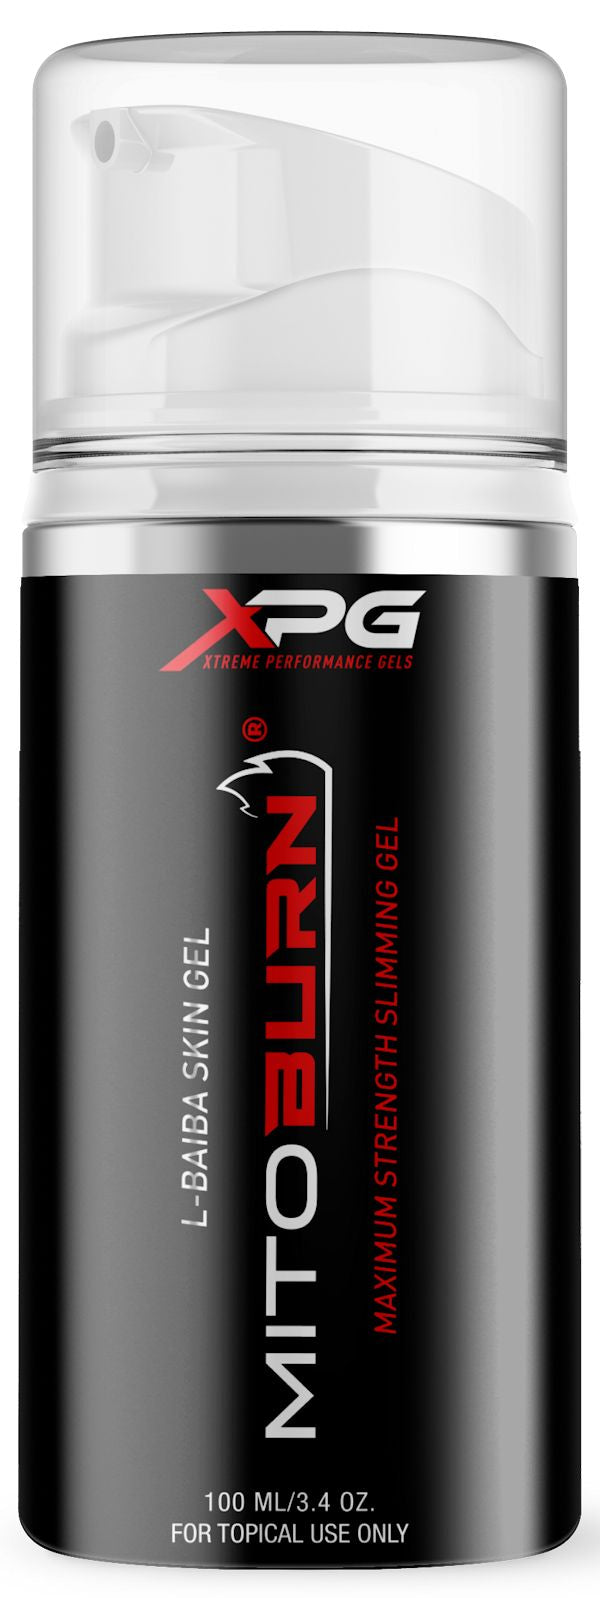 Xtreme Performance Gels XPG MitoBurn Gel Maximum Body and Fitness